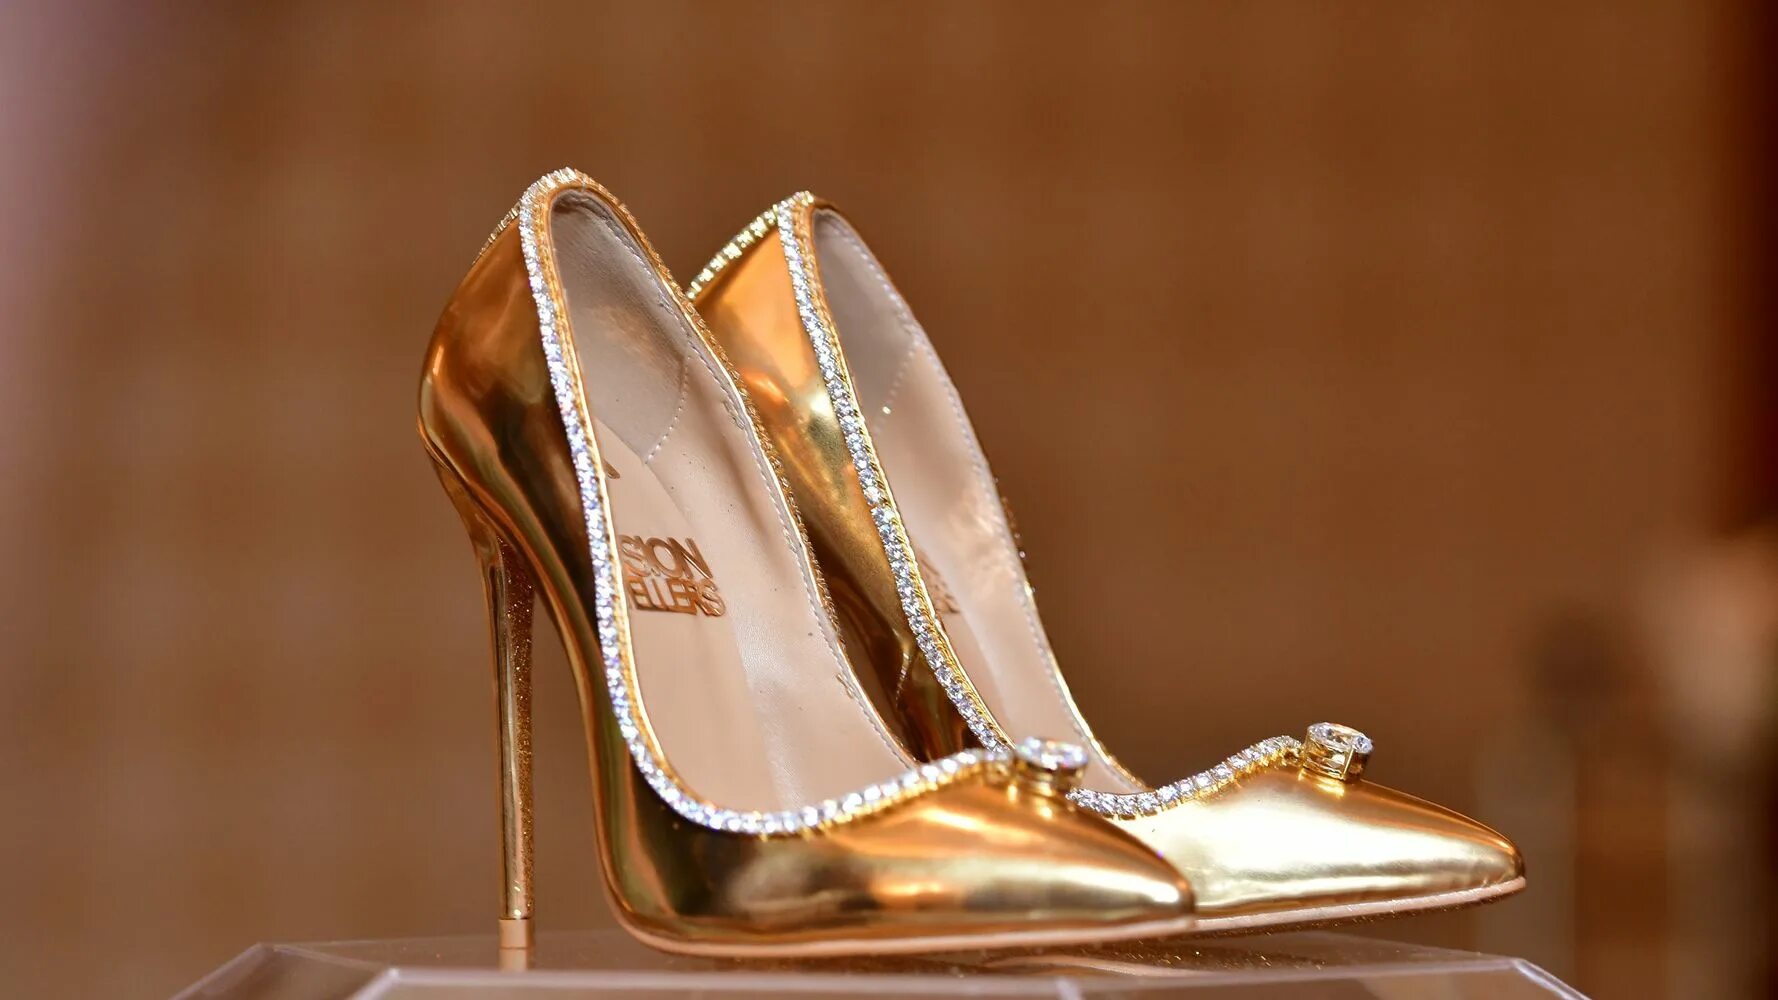 Туфли Пэшион Даймонд. Золотые туфли Jimmy Choo. Jada Dubai туфли. Jada Dubai passion Diamond Shoes. Expensive gold